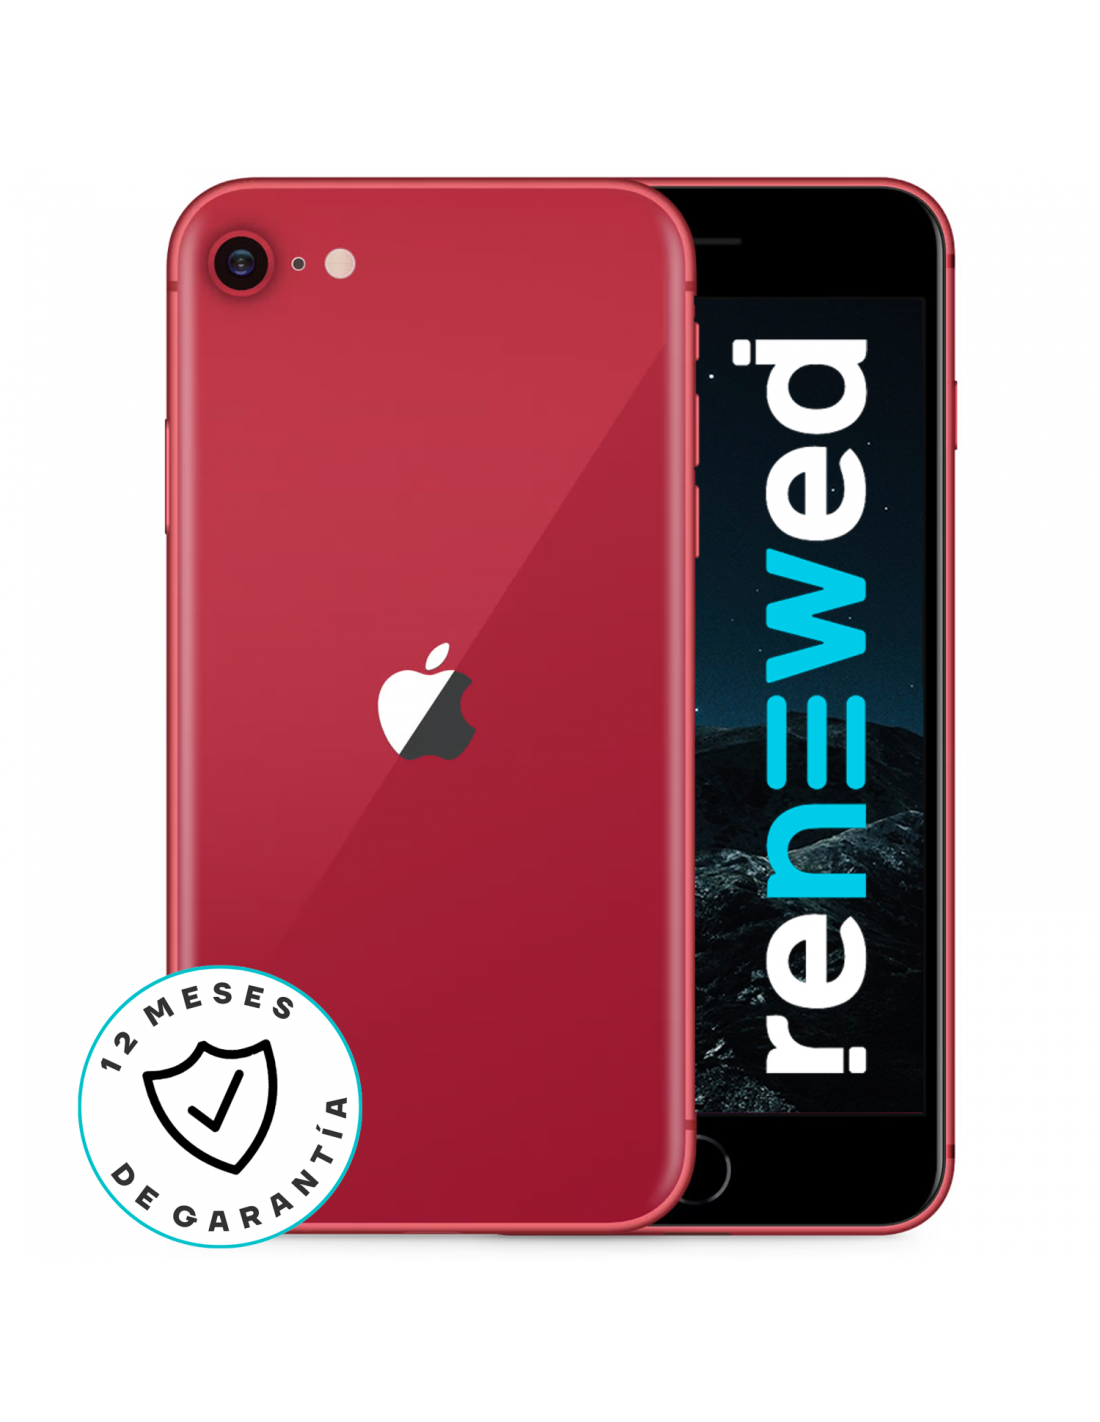 Apple iPhone 8 Plus Rojo 64 GB (Reacondicionado) 